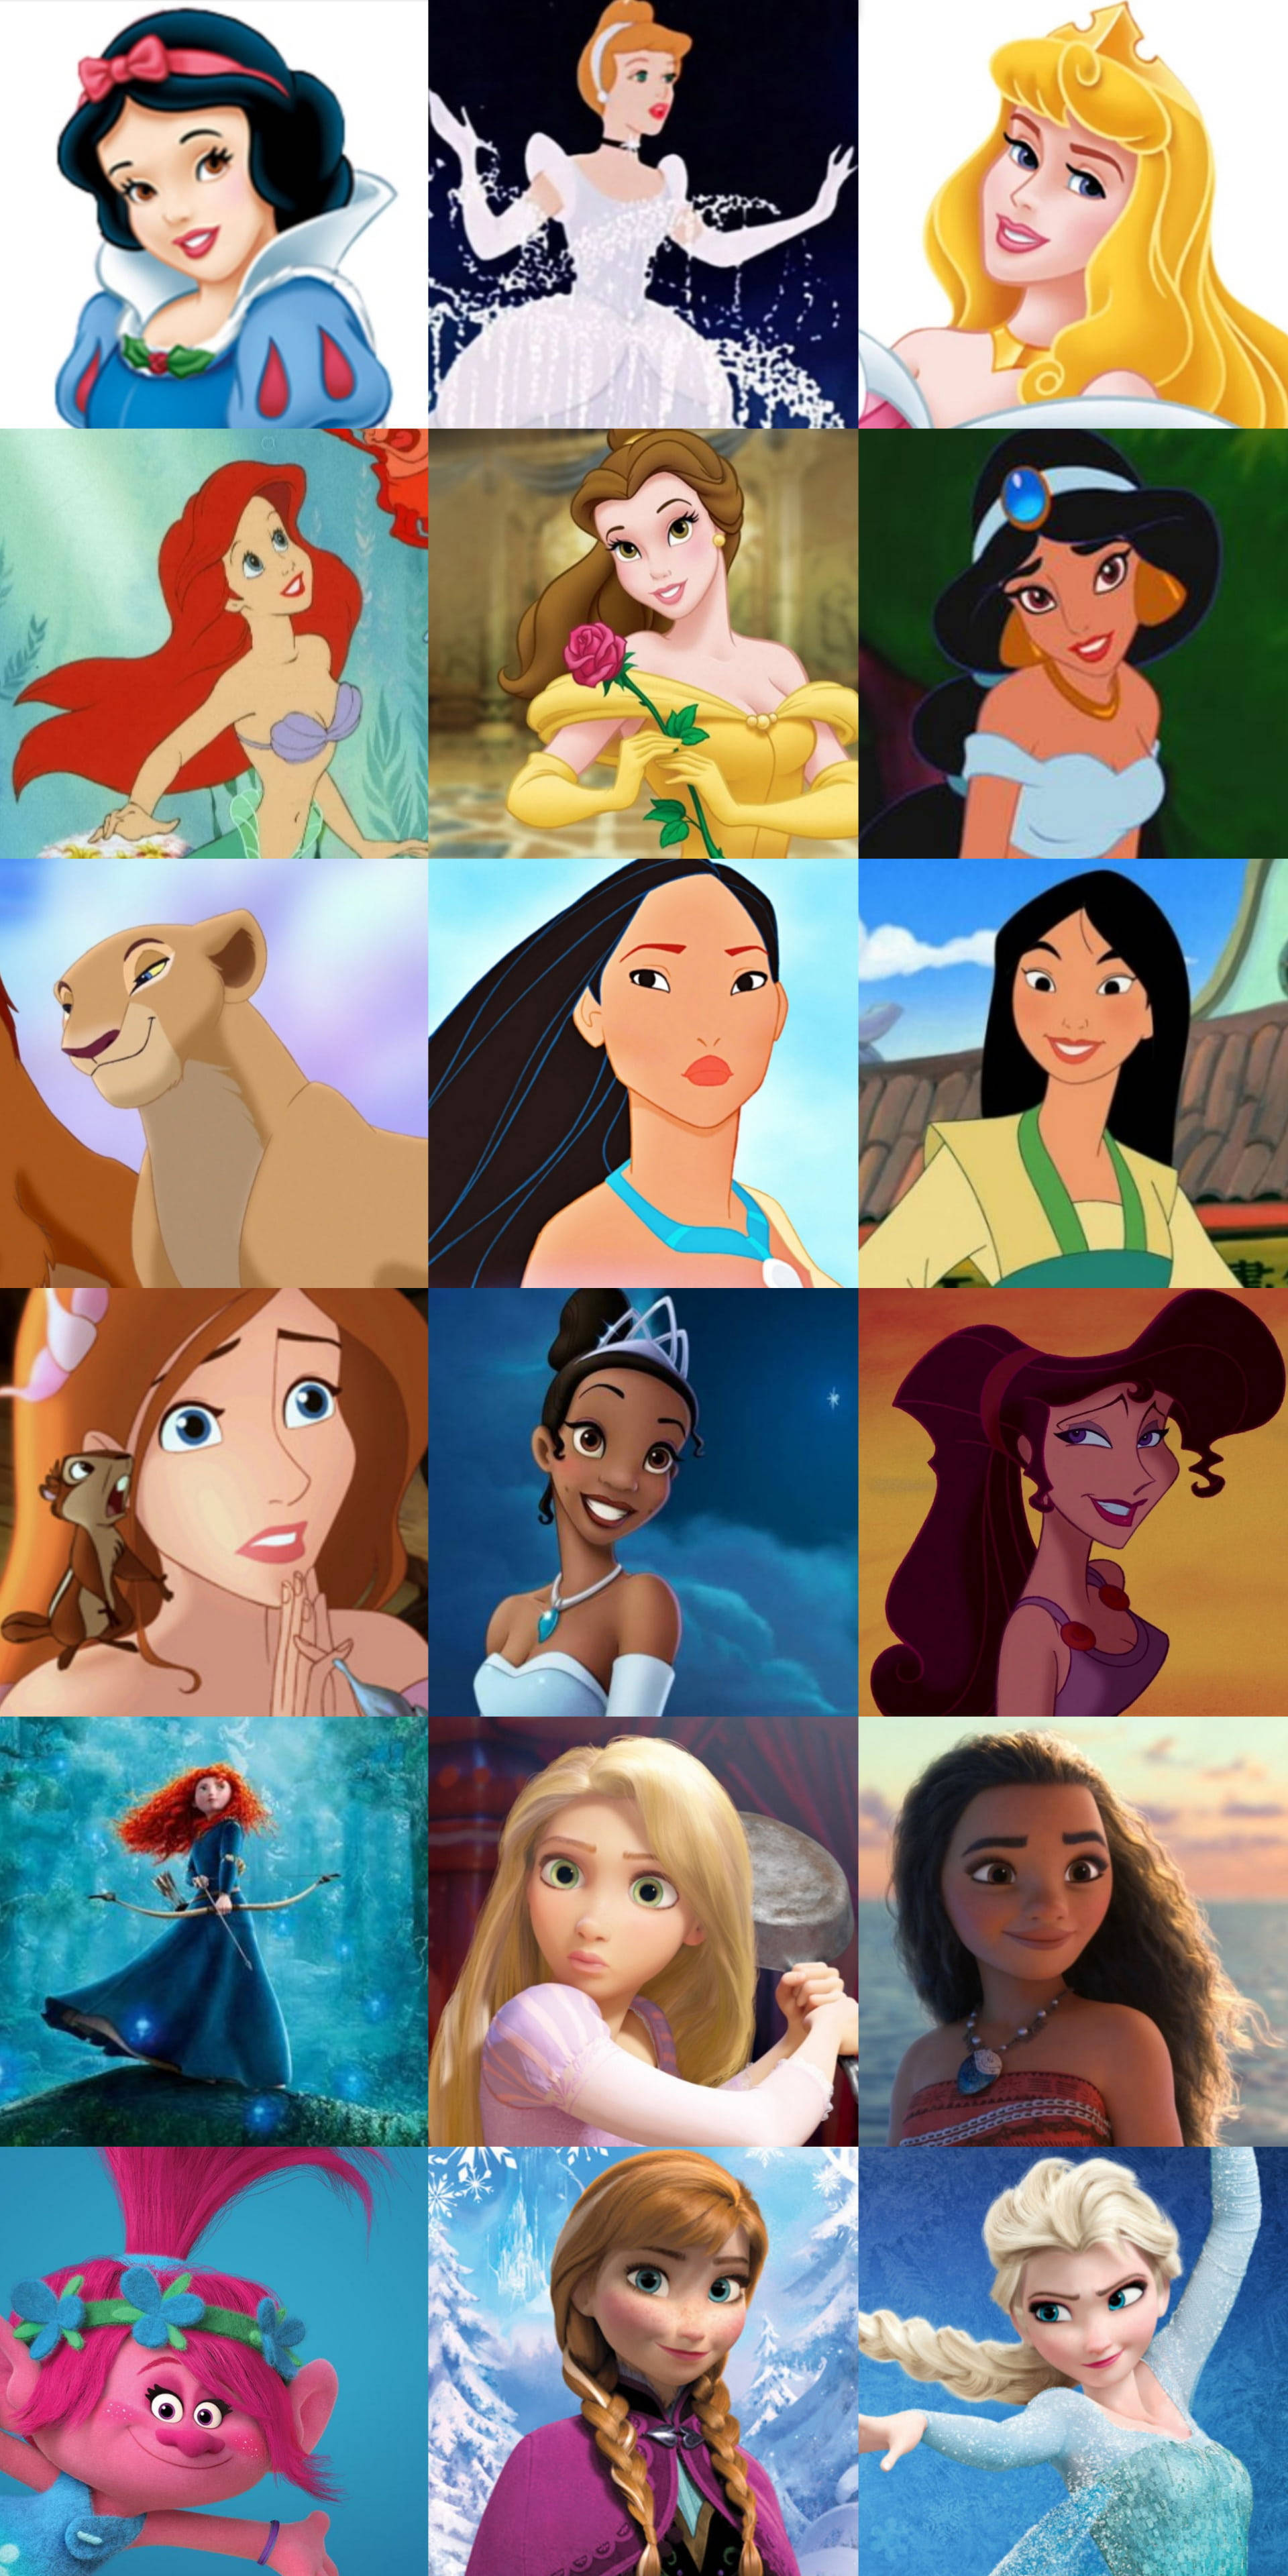 Disney Princess Iphone Wallpapers